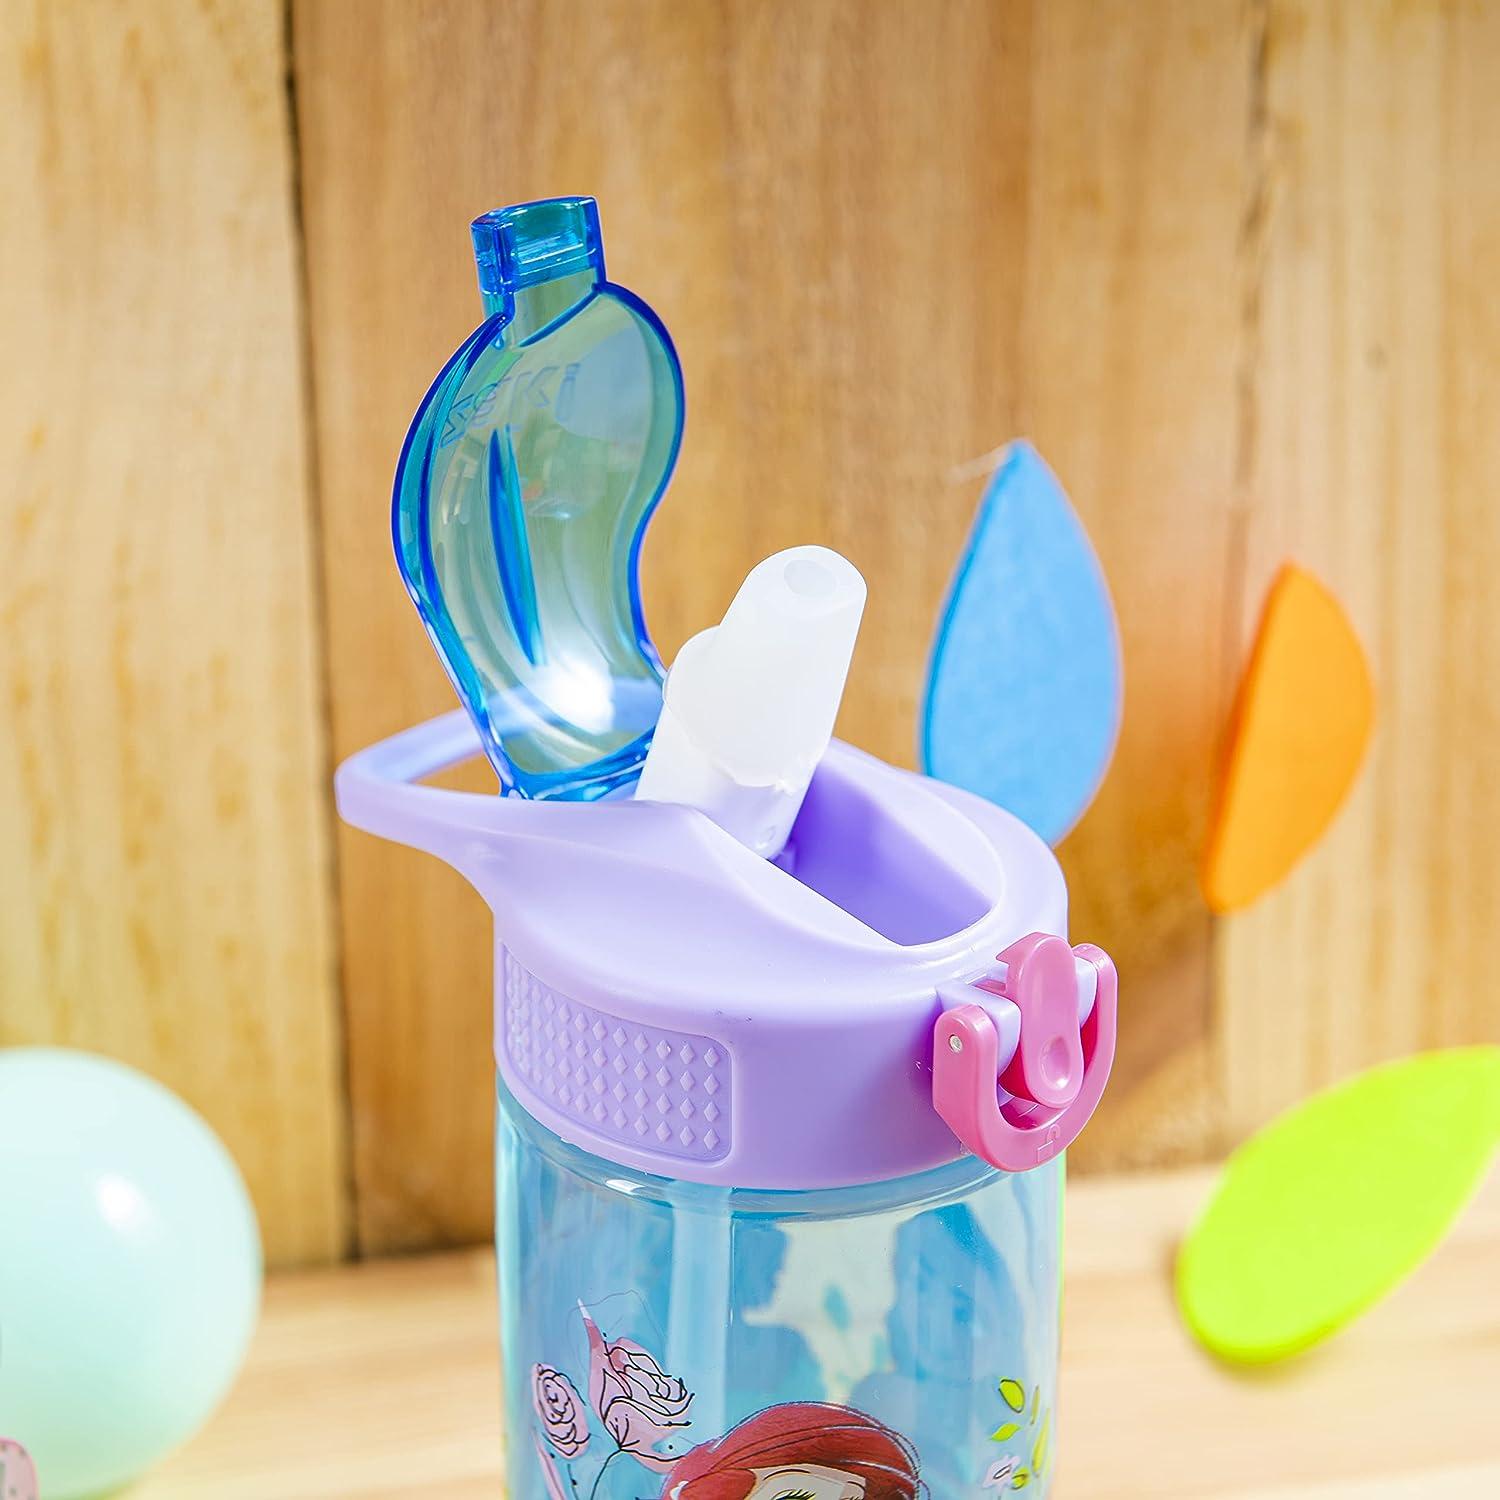 Zak Designs 16 oz. Plastic Tumbler with Lid and Straw, Disney Cinderella